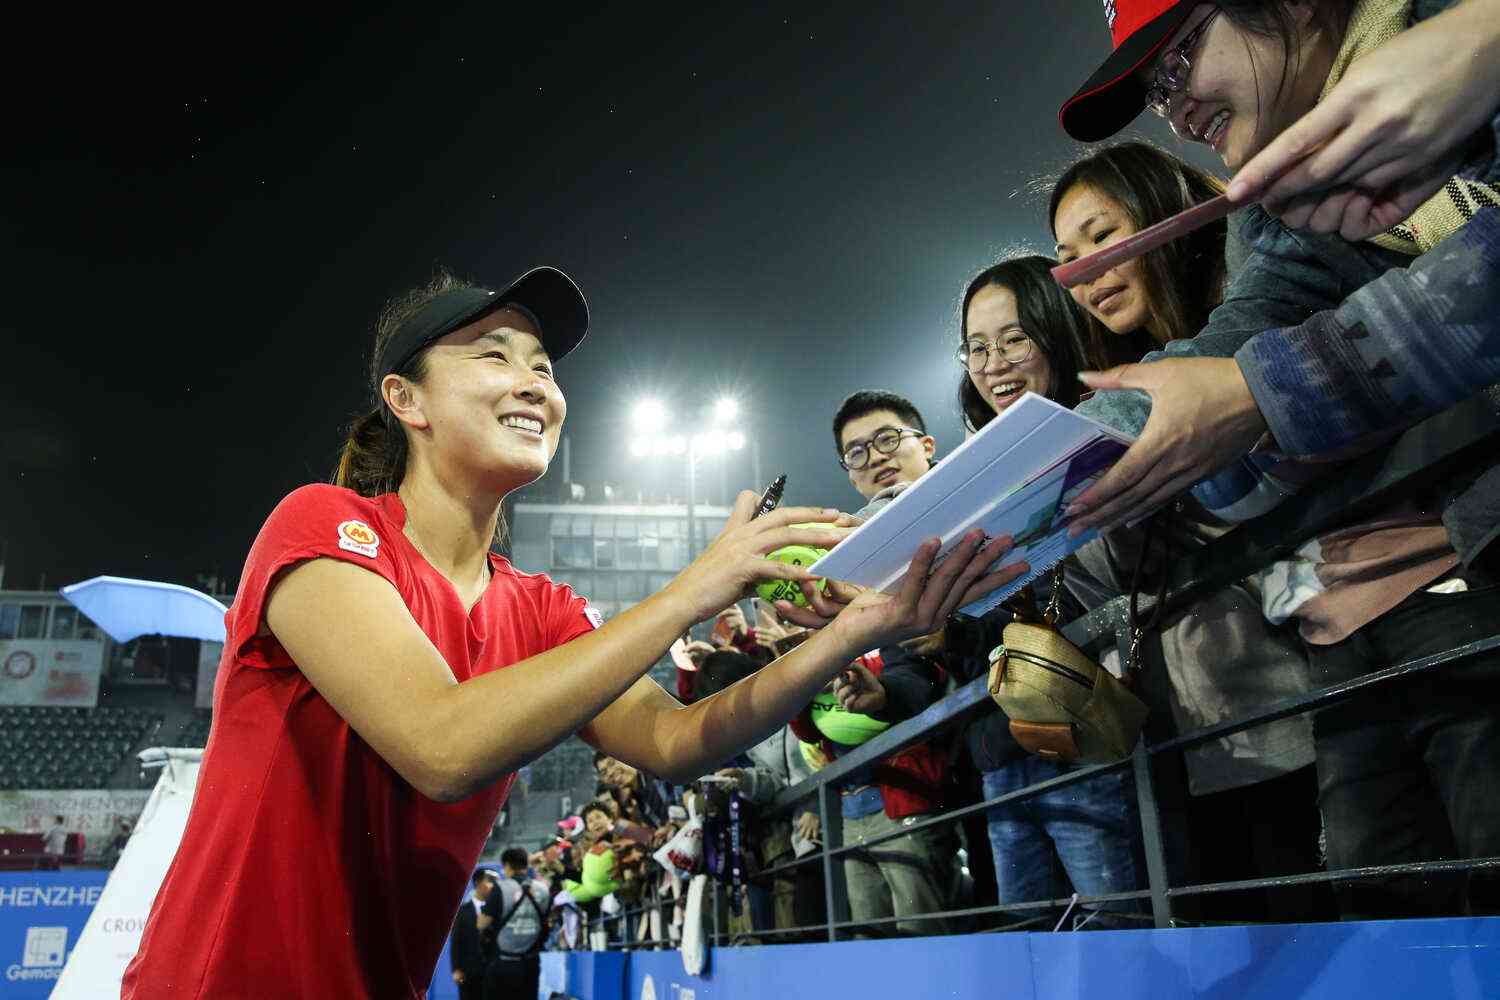 Chinese fans applaud Serena Williams' Davis Cup teammate Peng Shuai